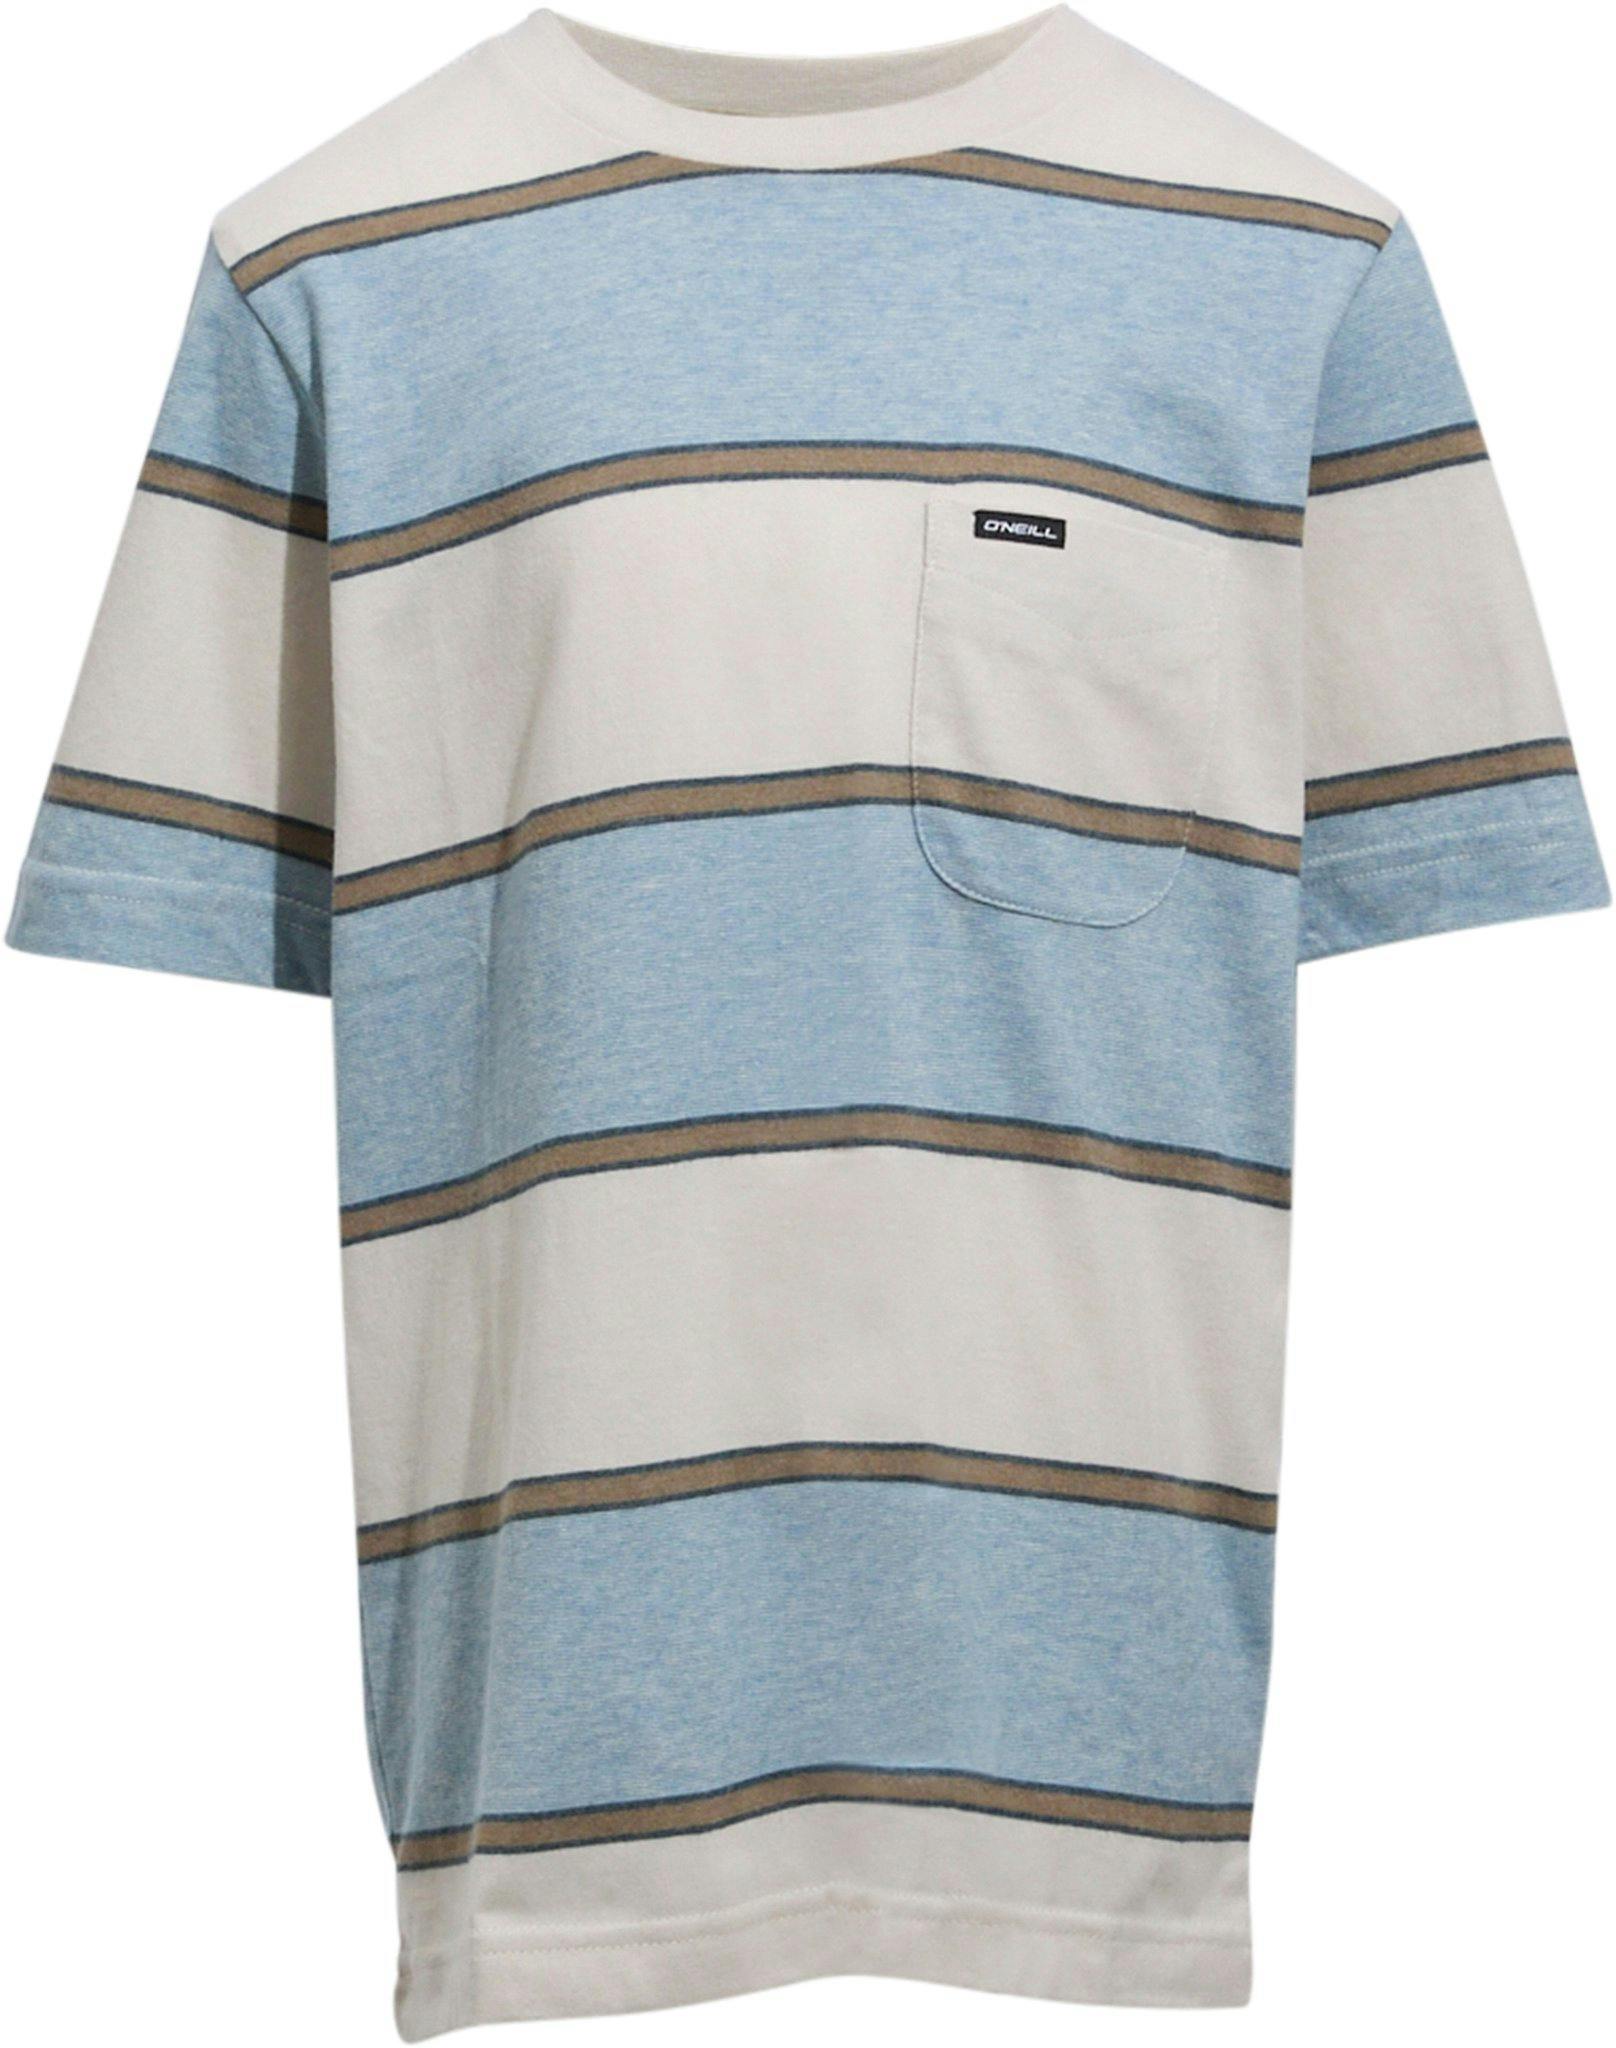 Product image for Bolder T-Shirt - Boys